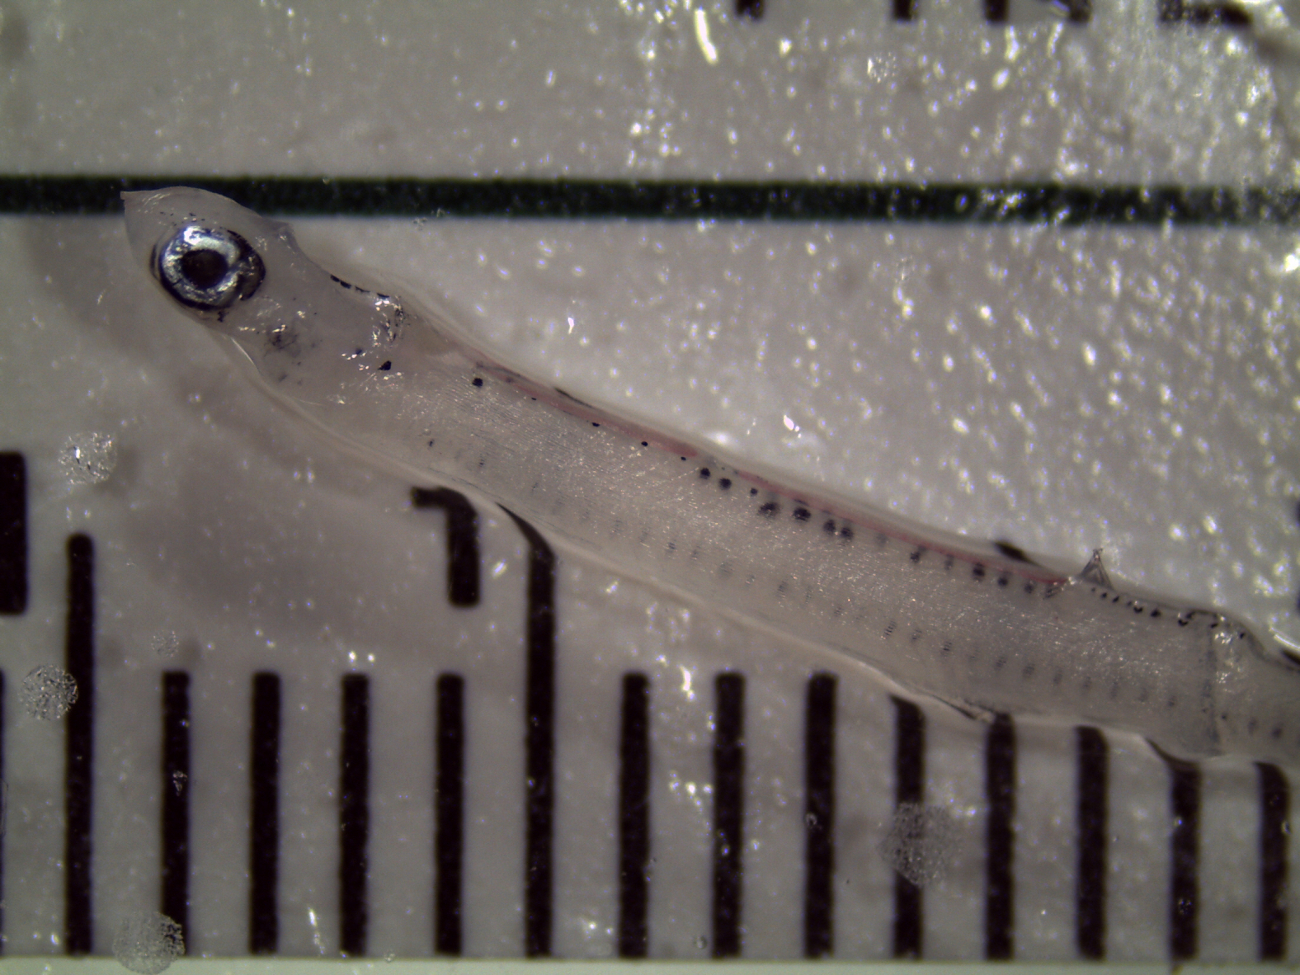 Fish larva seen under the microscope